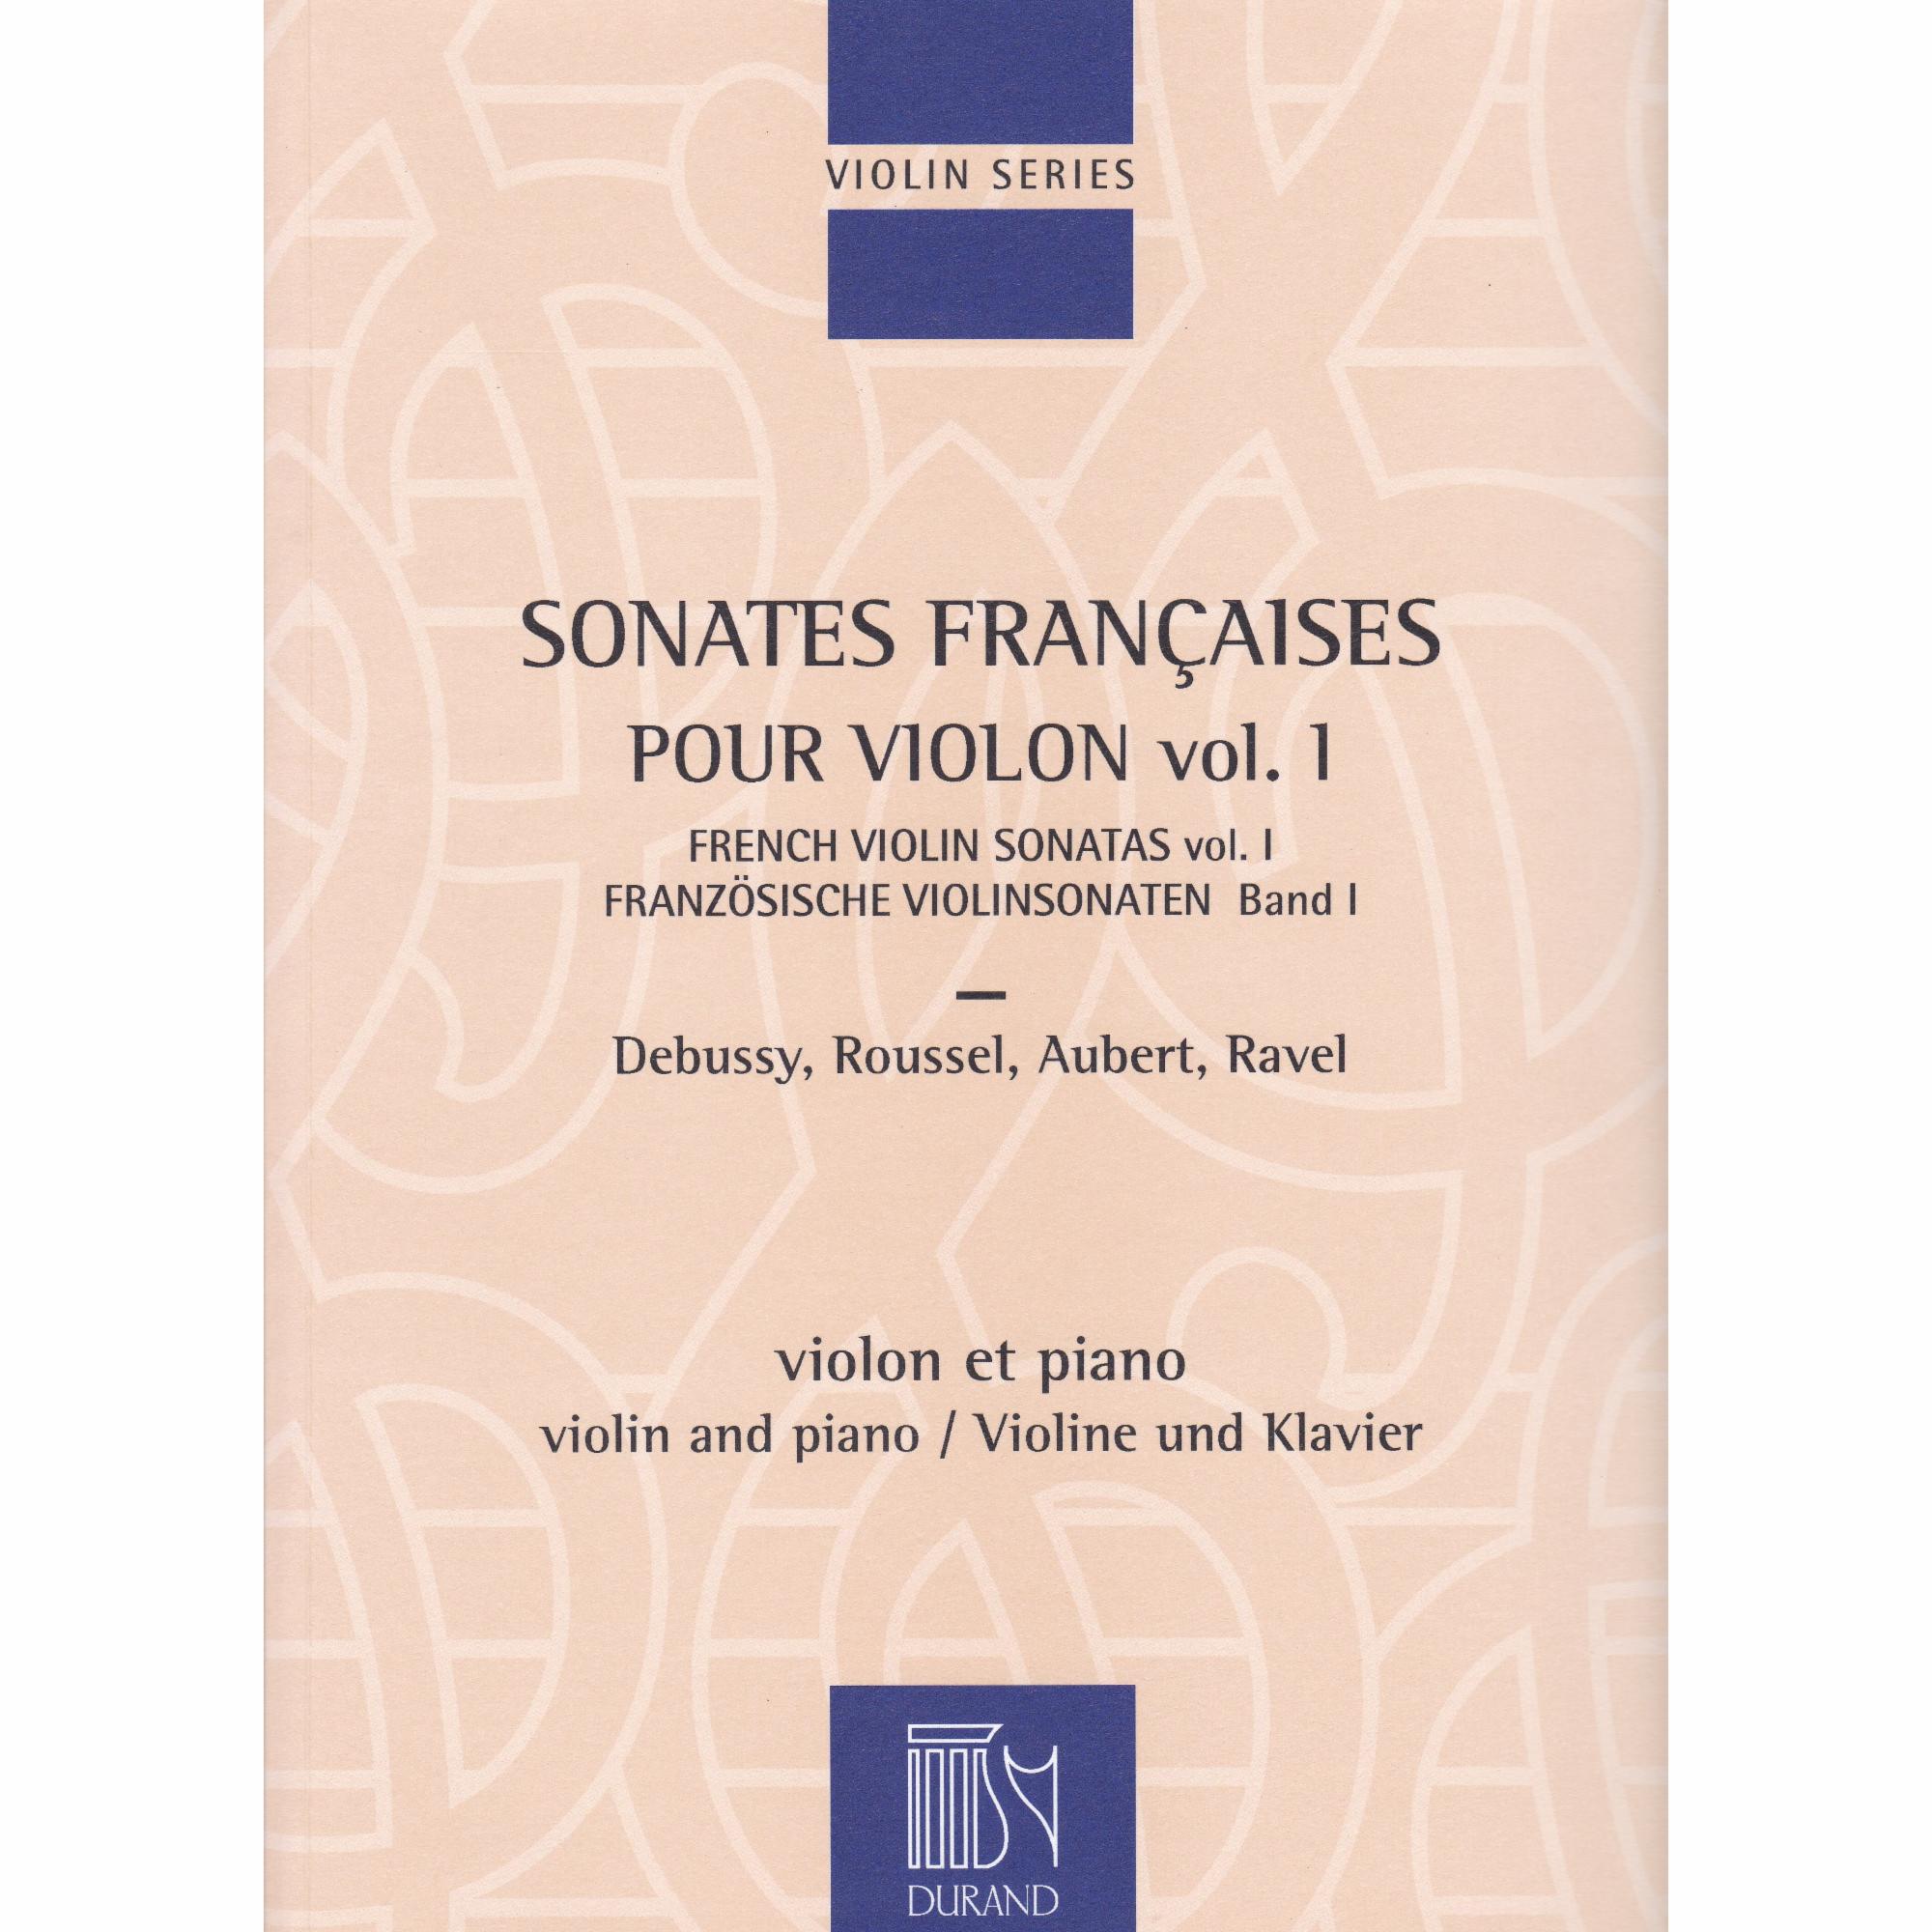 French Violin Sonatas, Vol. I